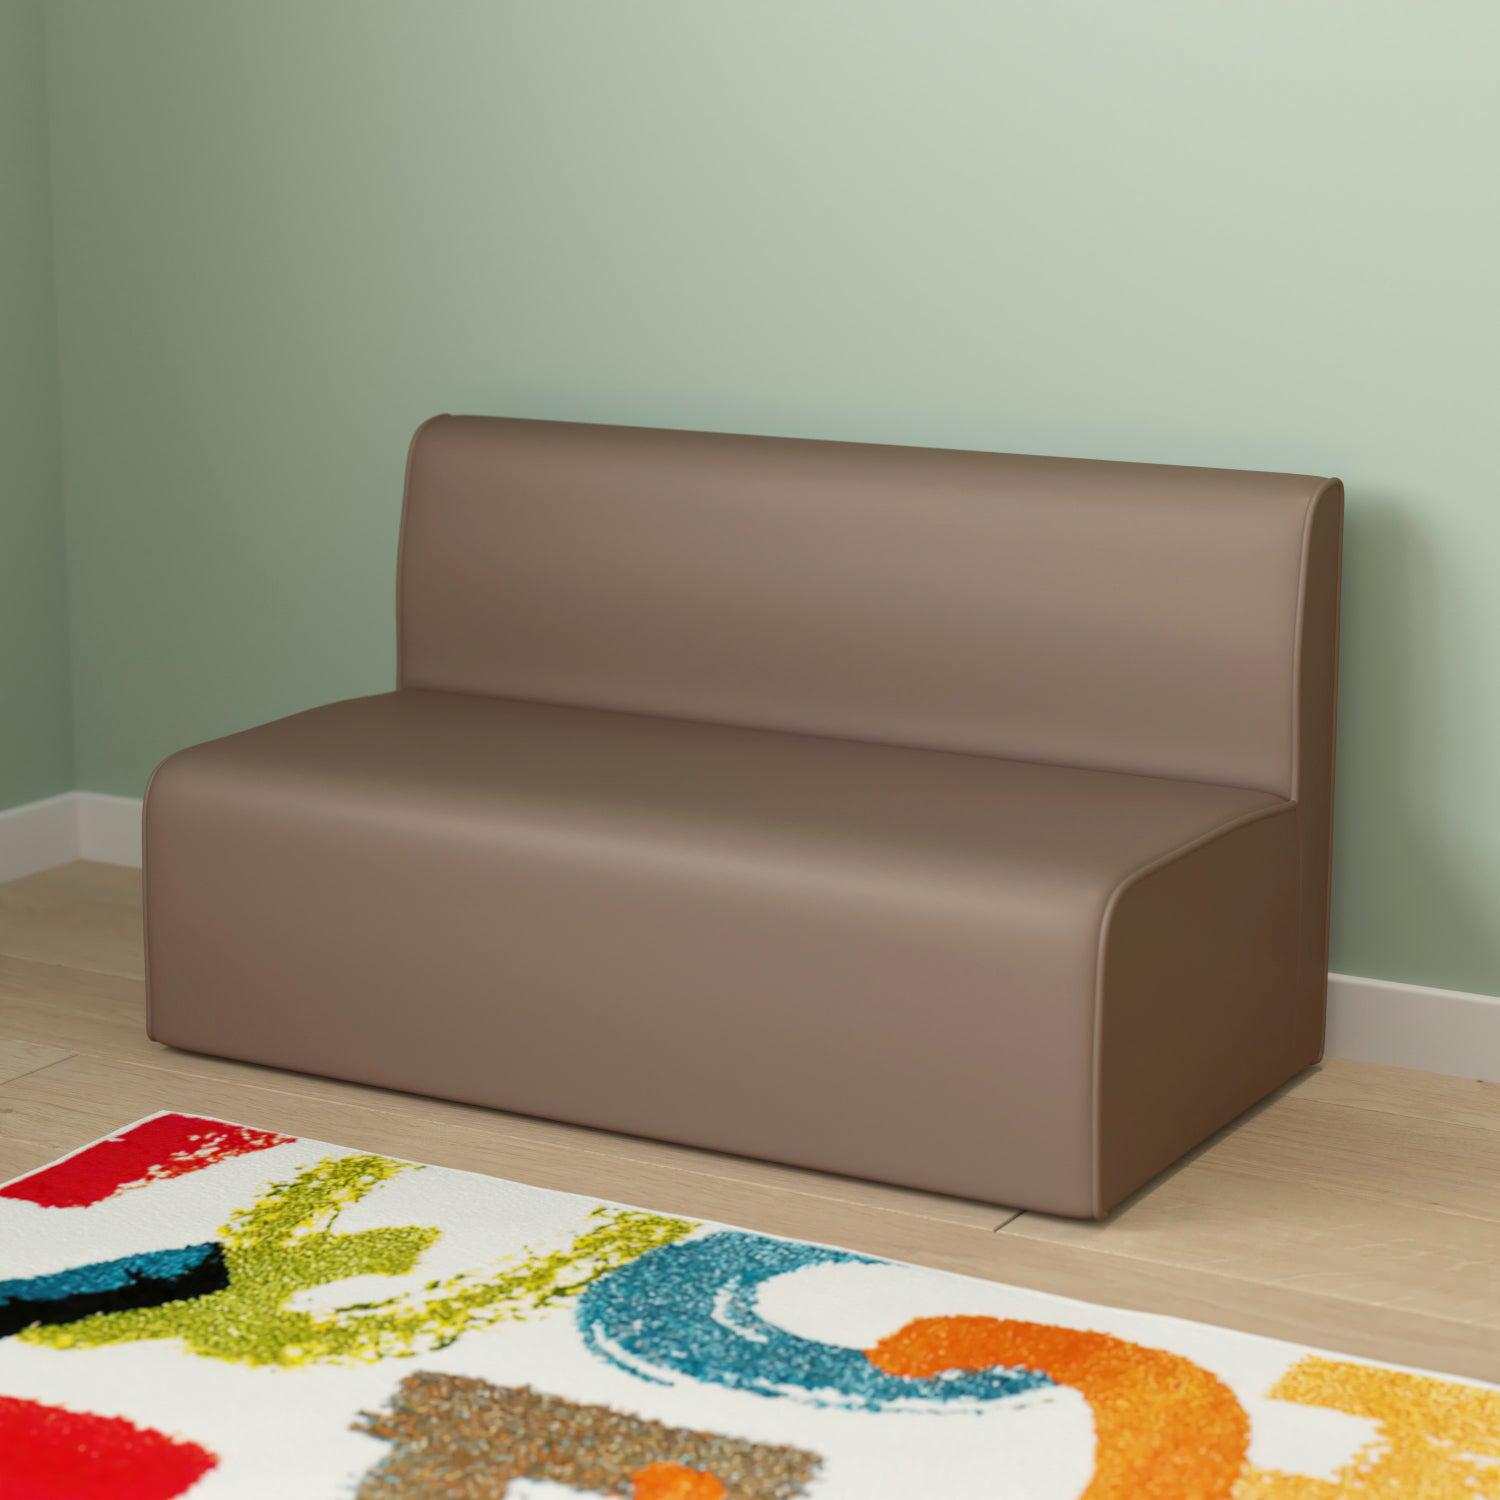 Bright Beginnings Commercial Grade Modular Classroom Soft Seating, Armless 2-Seater Sofa, Neutral Vinyl